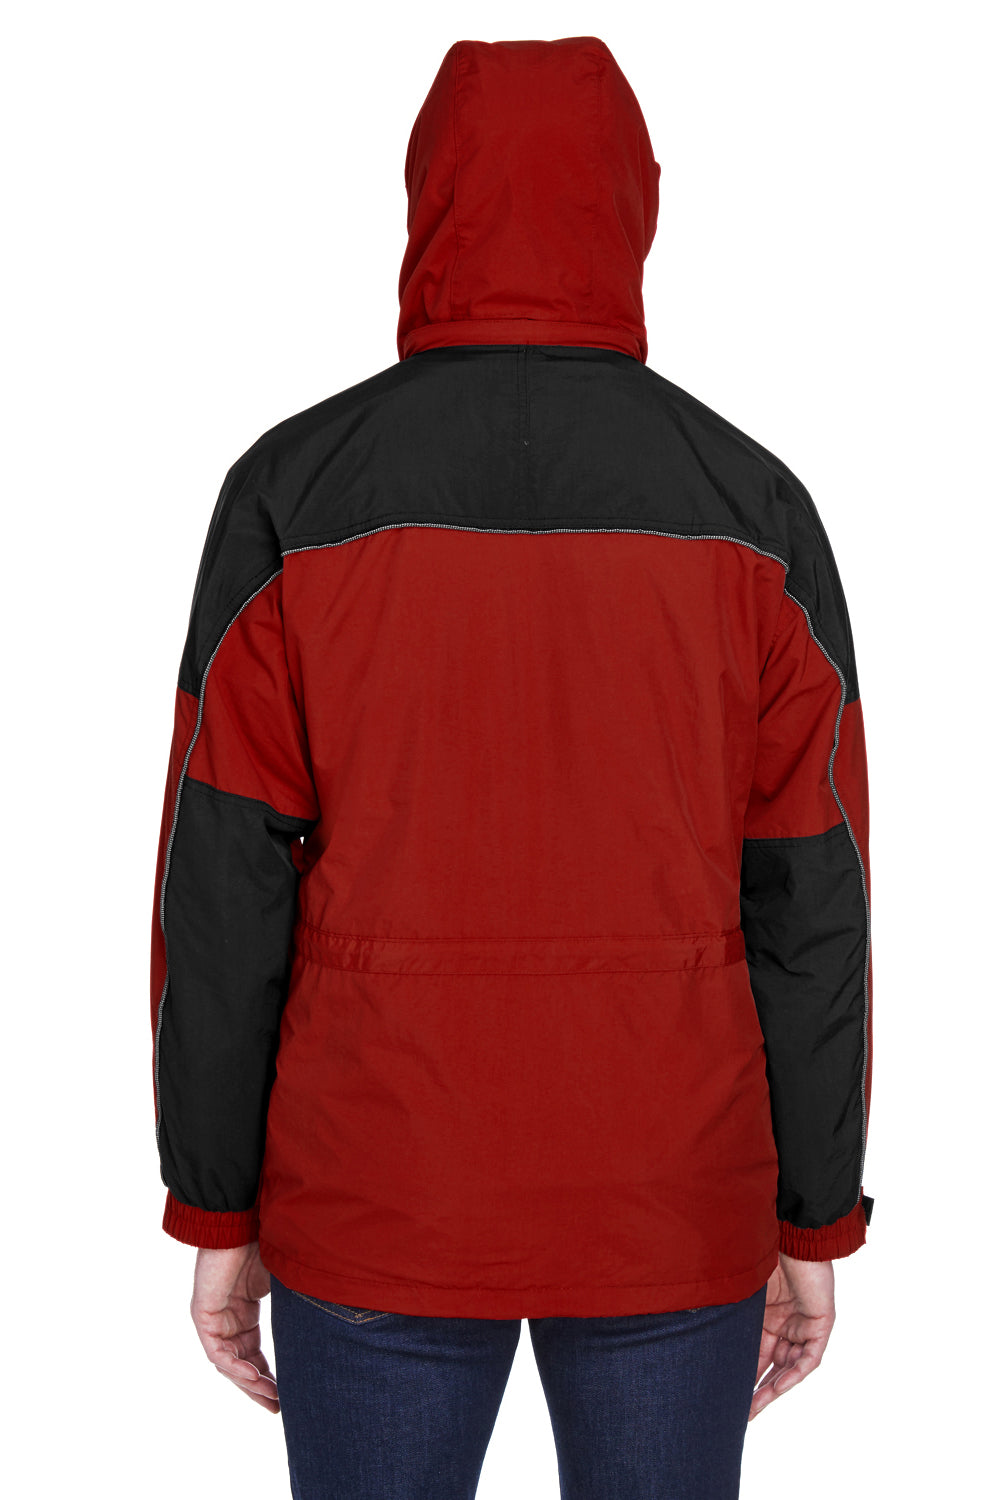 North End 88006 Mens 3-in-1 Full Zip Hooded Jacket Red/Black Back